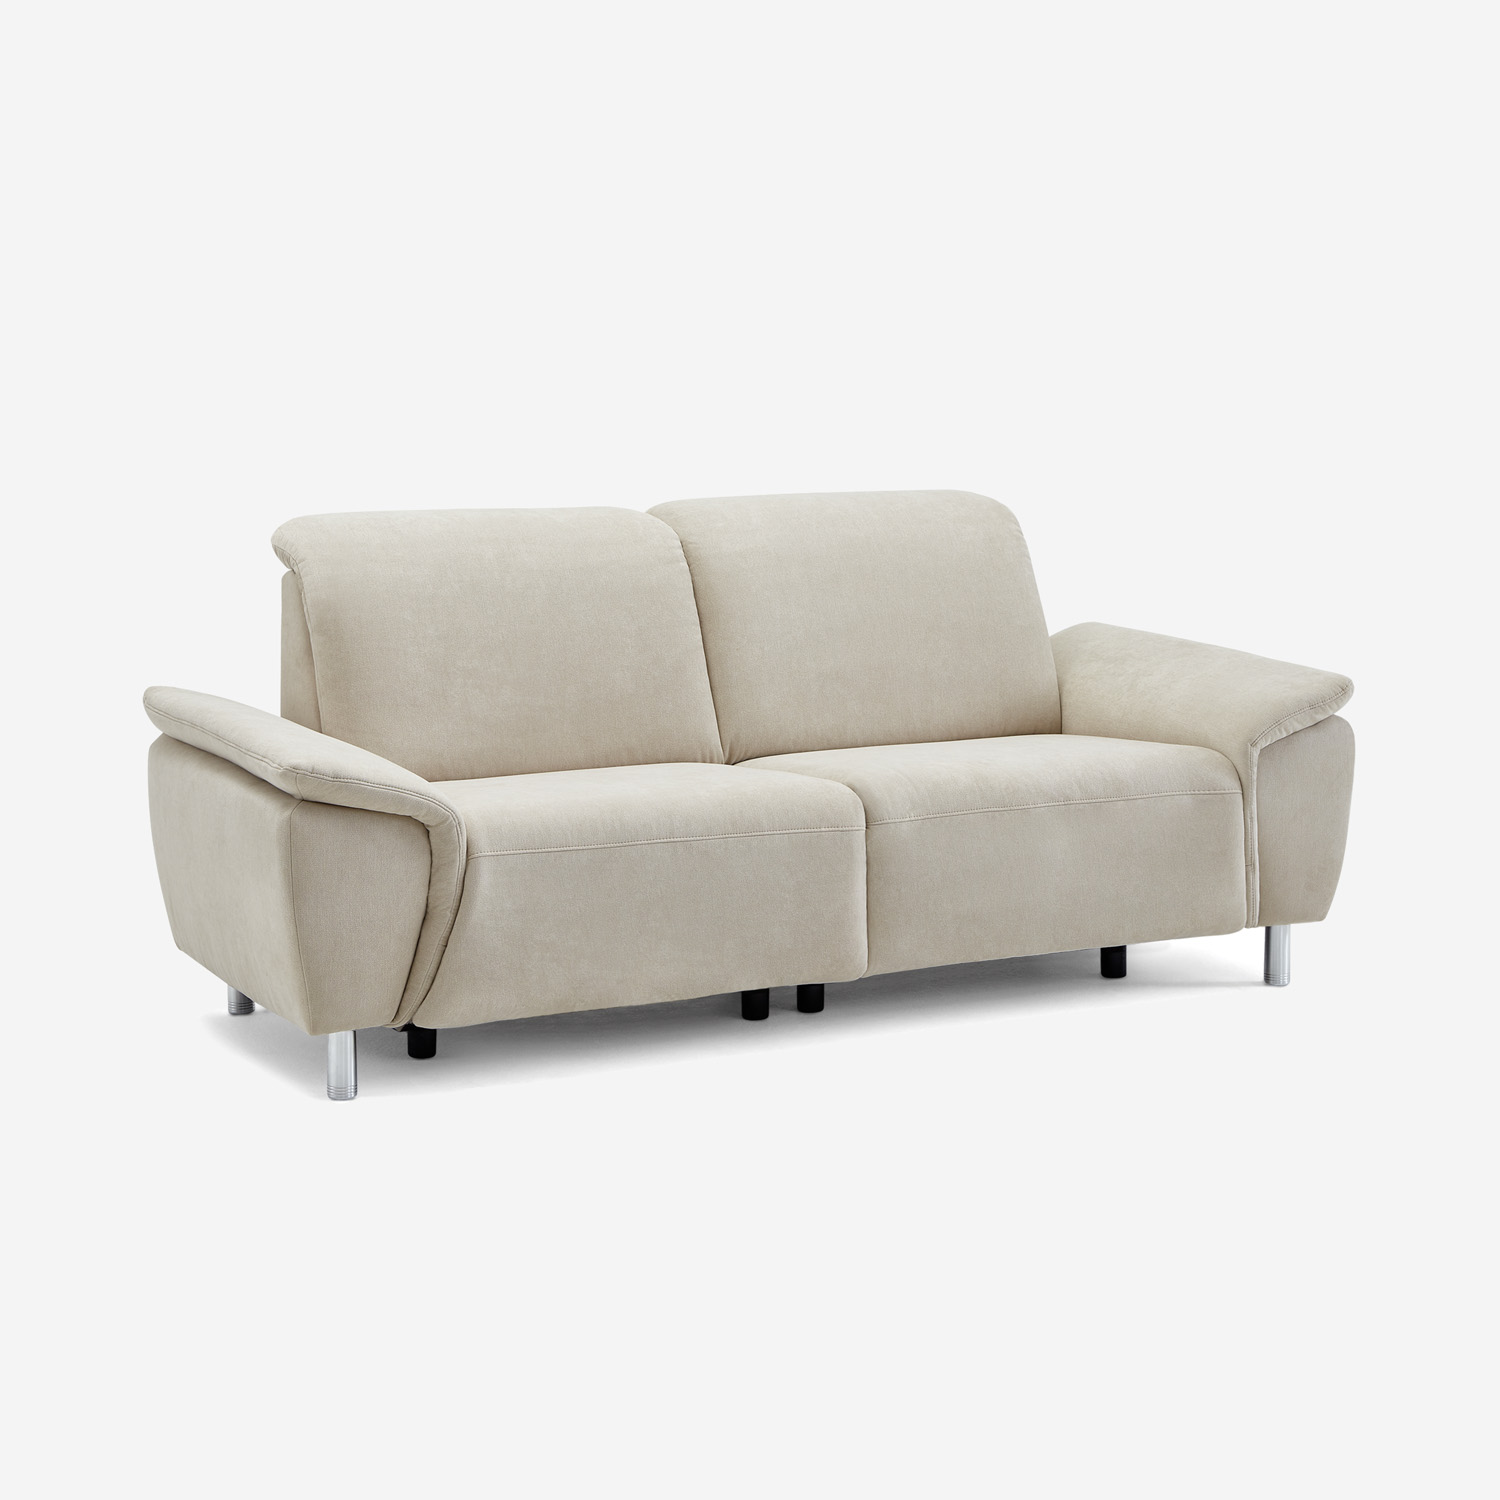 2-Sitzer Sofa Nell mit Calizza Beige Interiors Relaxfunktion - motorischer